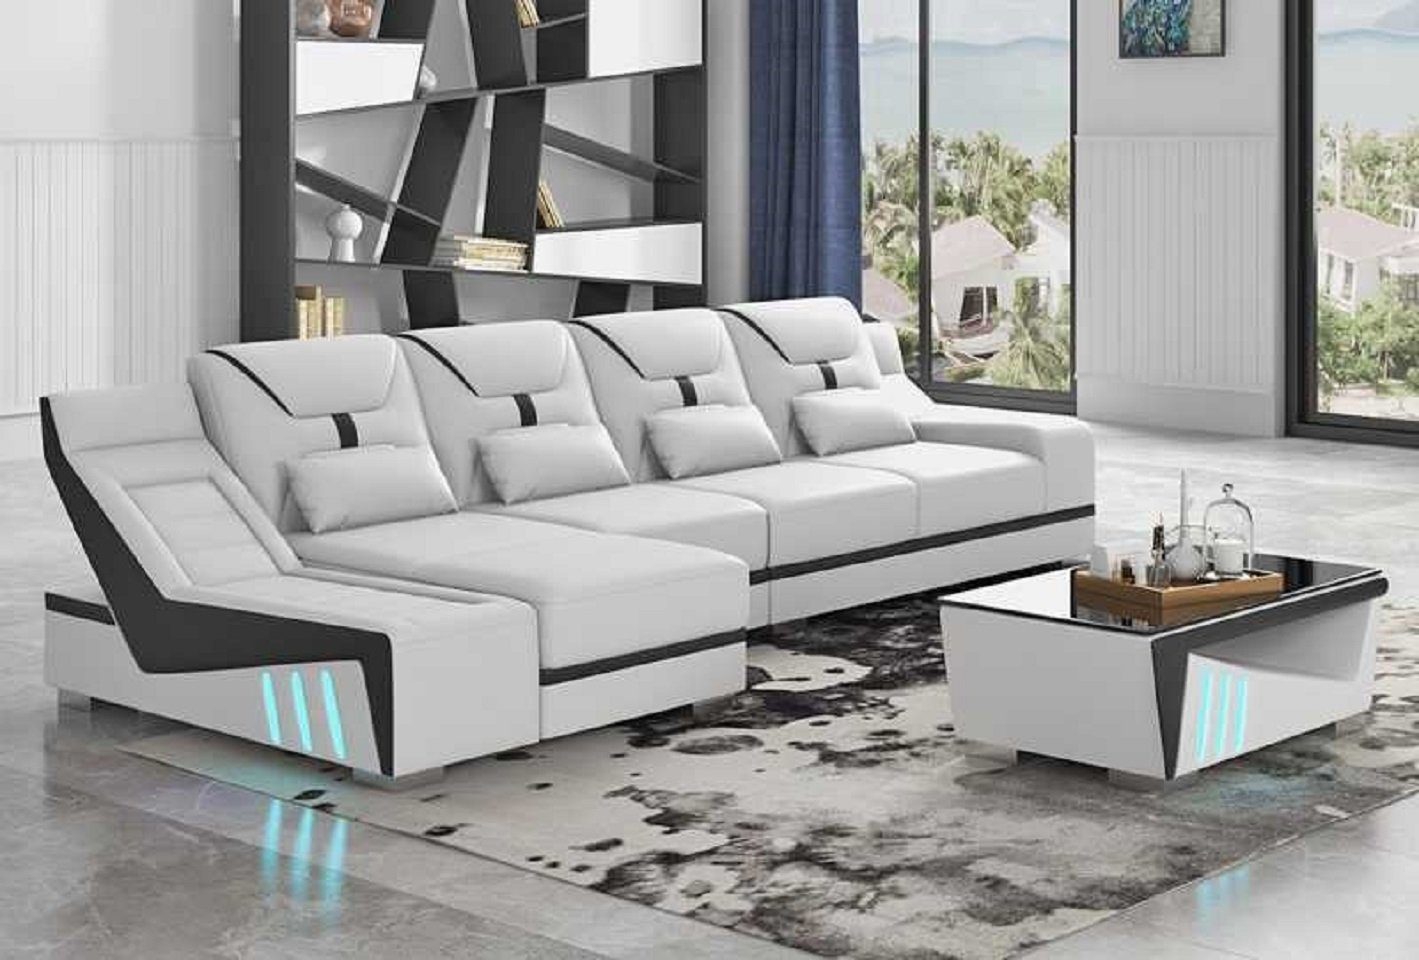 JVmoebel Ecksofa Modern Ecksofa Designersofa Sofa L Form Couch Sofas Eck Möbel, 3 Teile, Made in Europe Weiß | Ecksofas